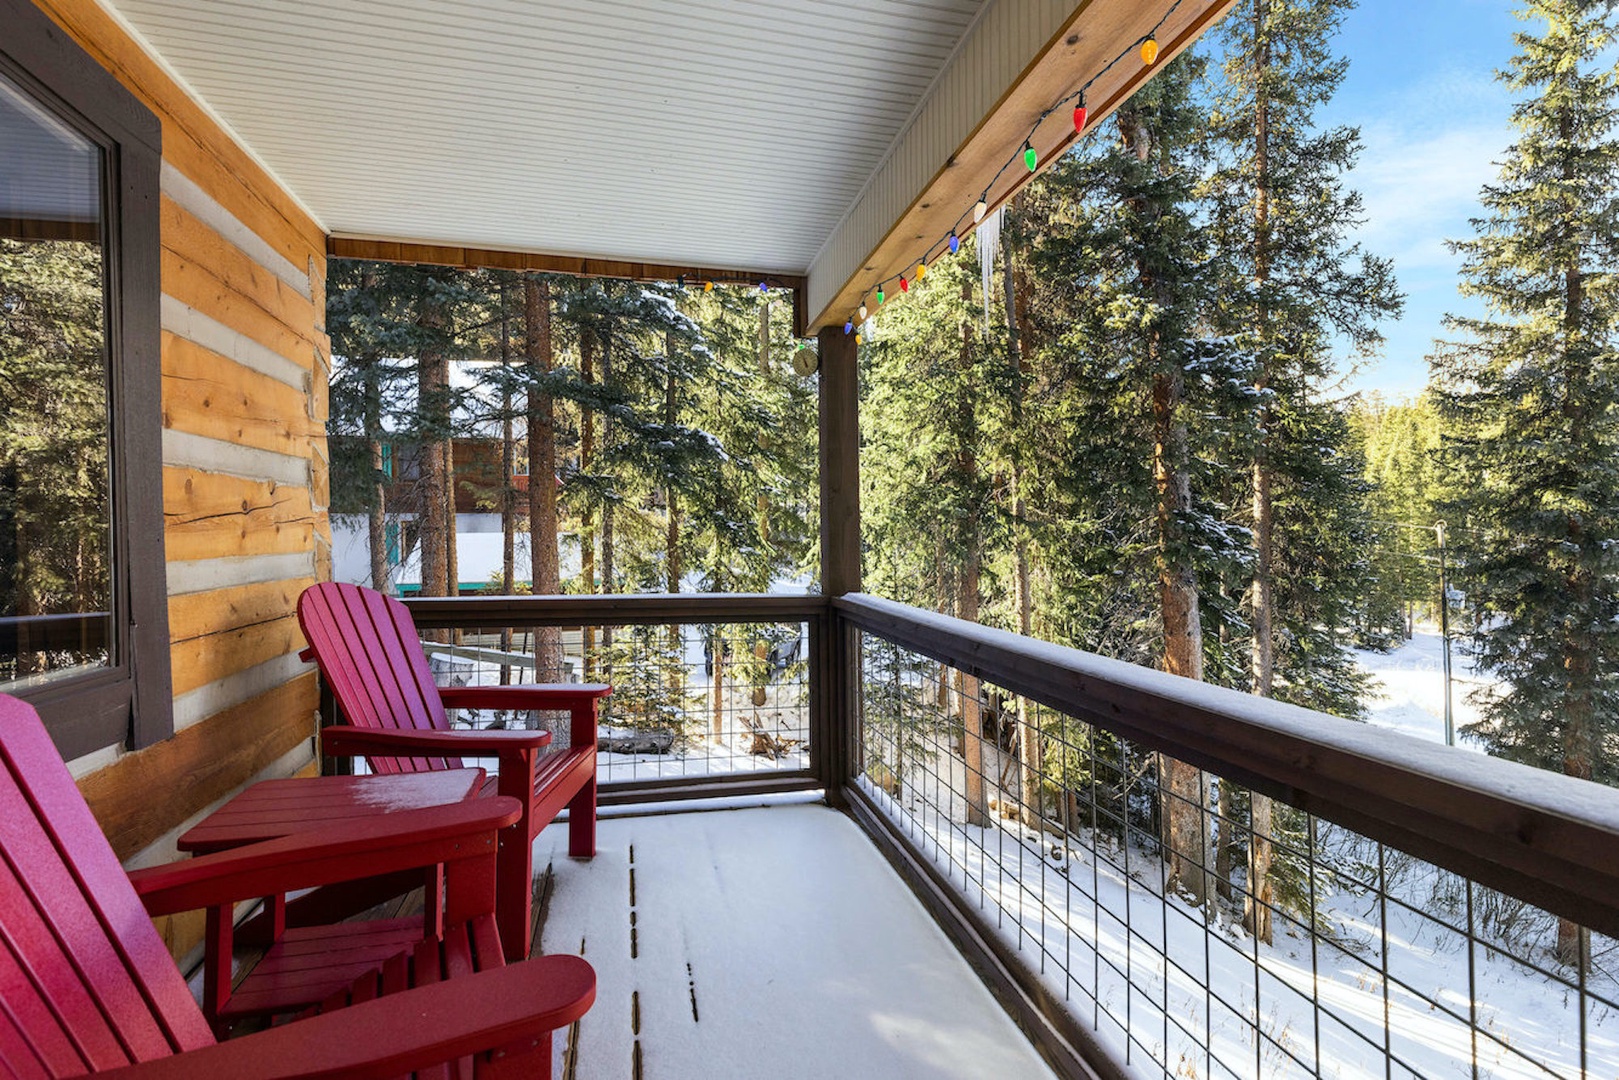 Step outside & breathe the fresh air on the spacious deck